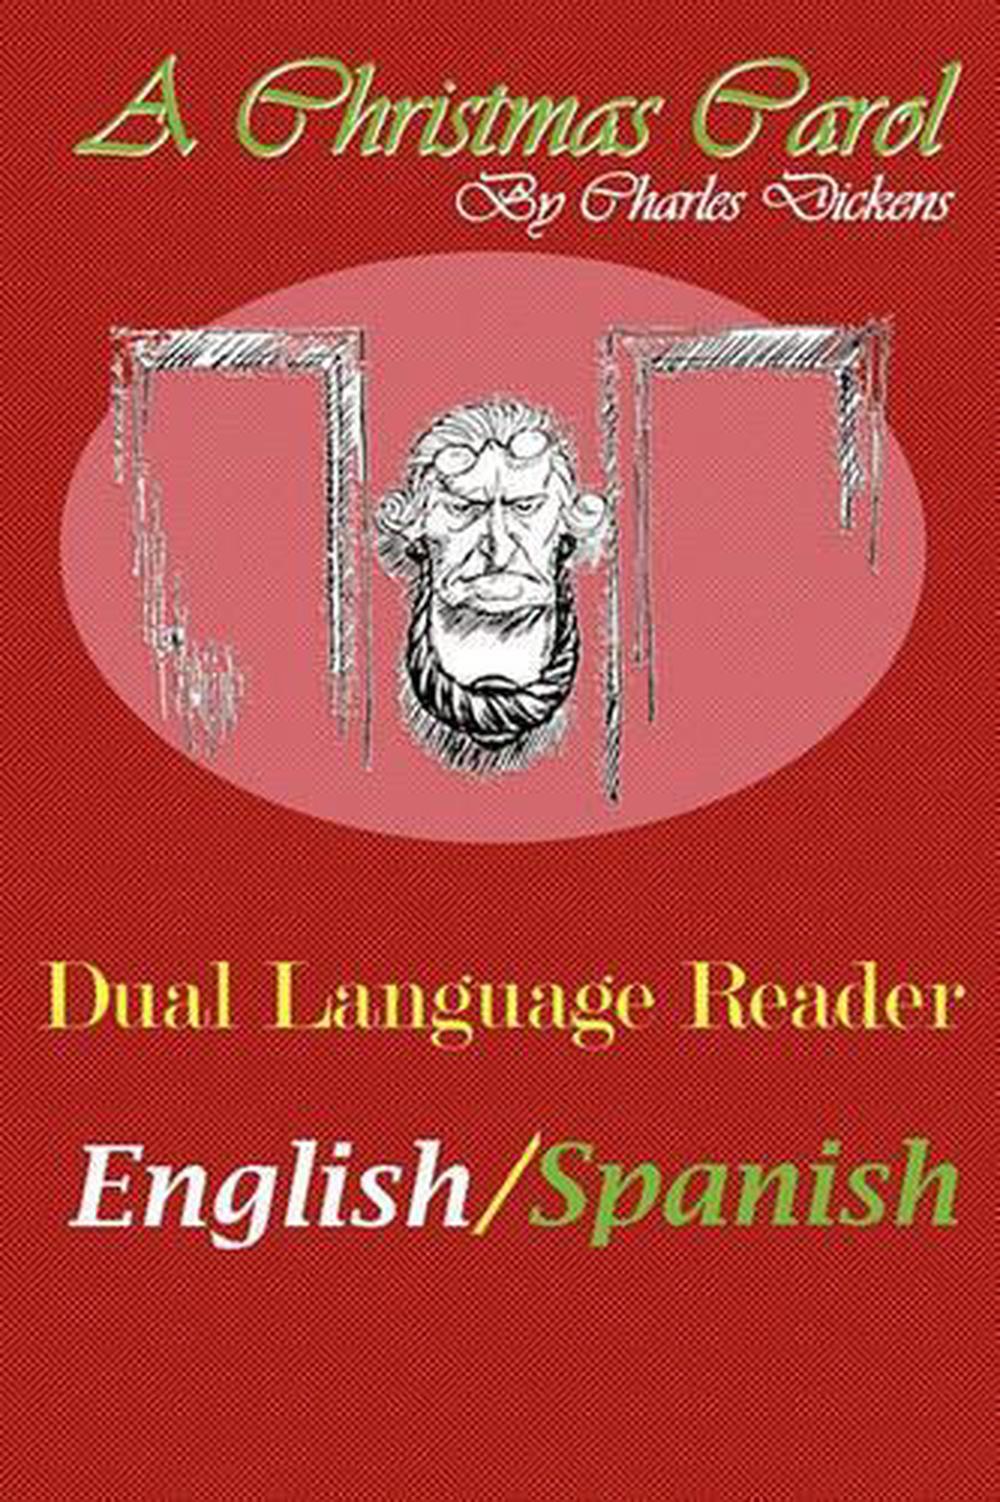 A Christmas Carol: Dual Language Reader (English/Spanish) by Charles Dickens (En 9780983150305 ...